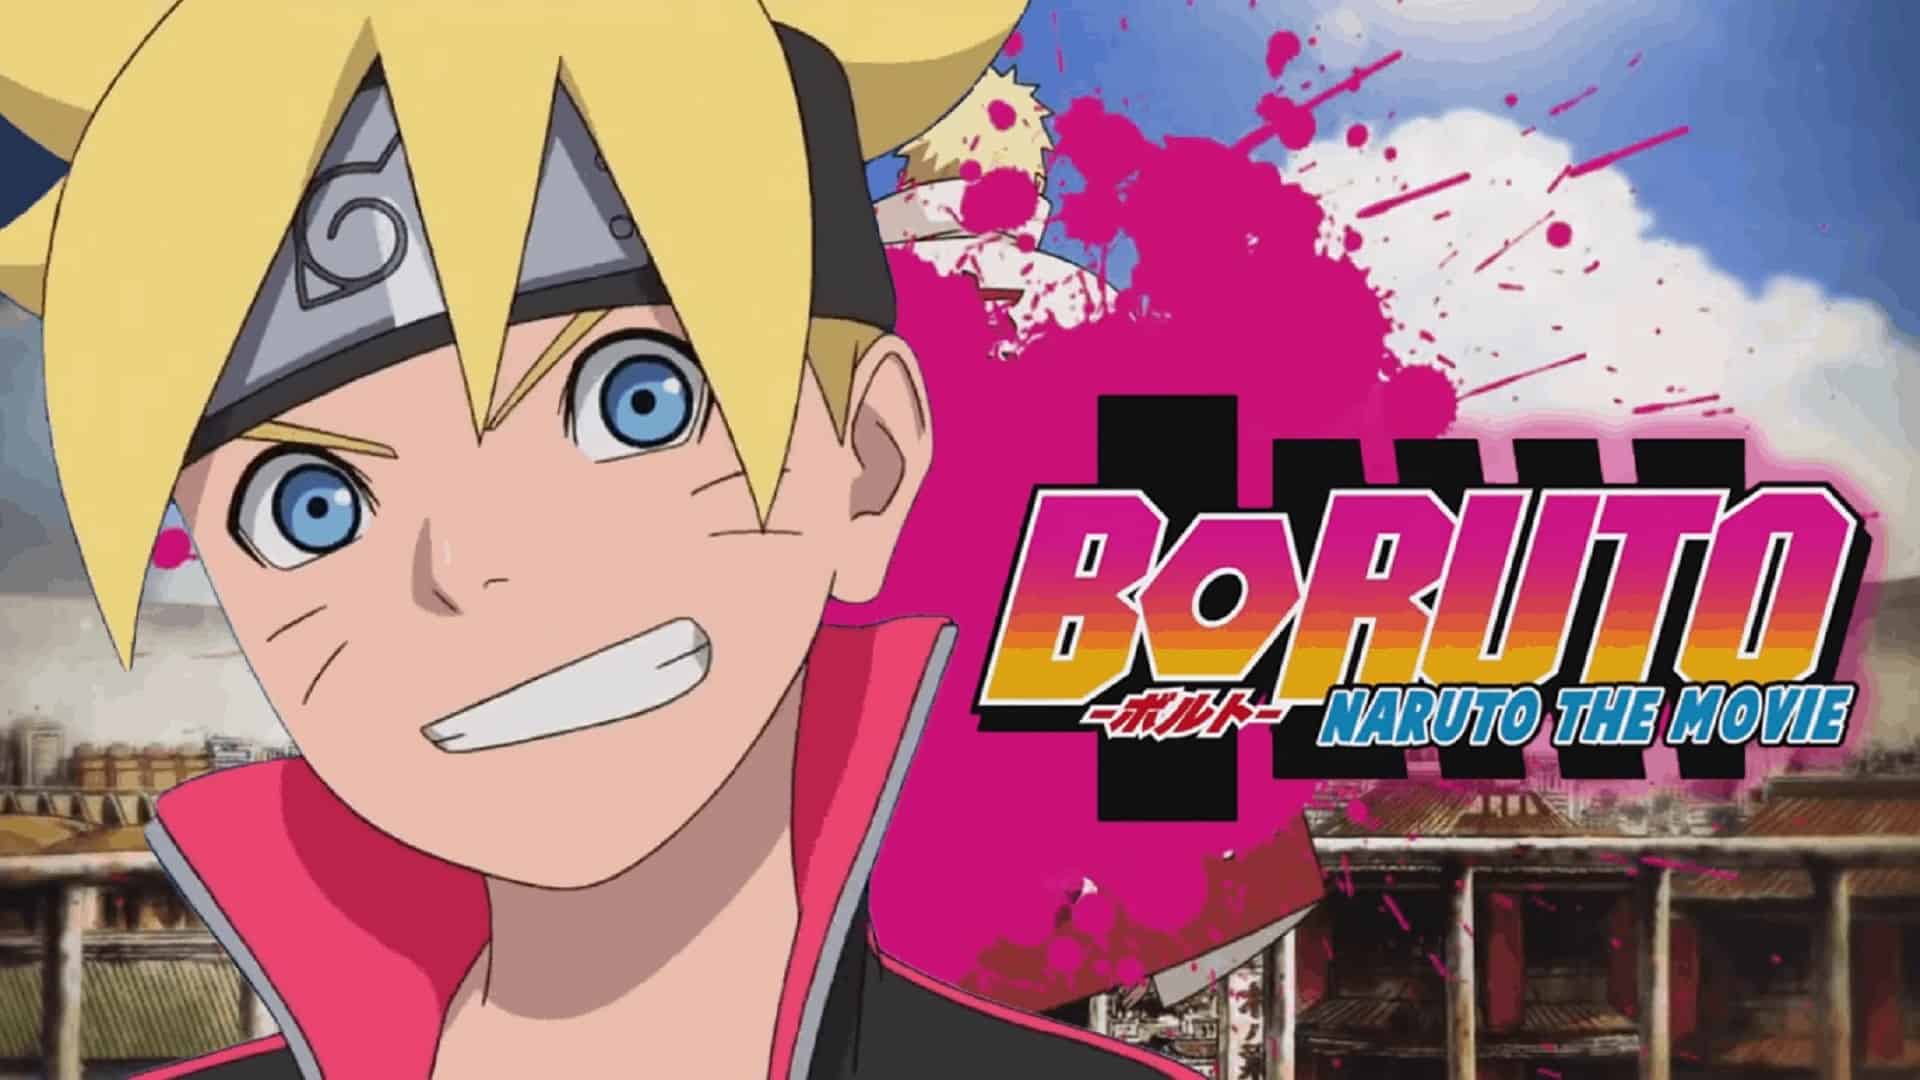 Boruto Naruto The Movie Hindi Dubbed Download 360p 480p 720p HD 1080p FHD Rare Toons India